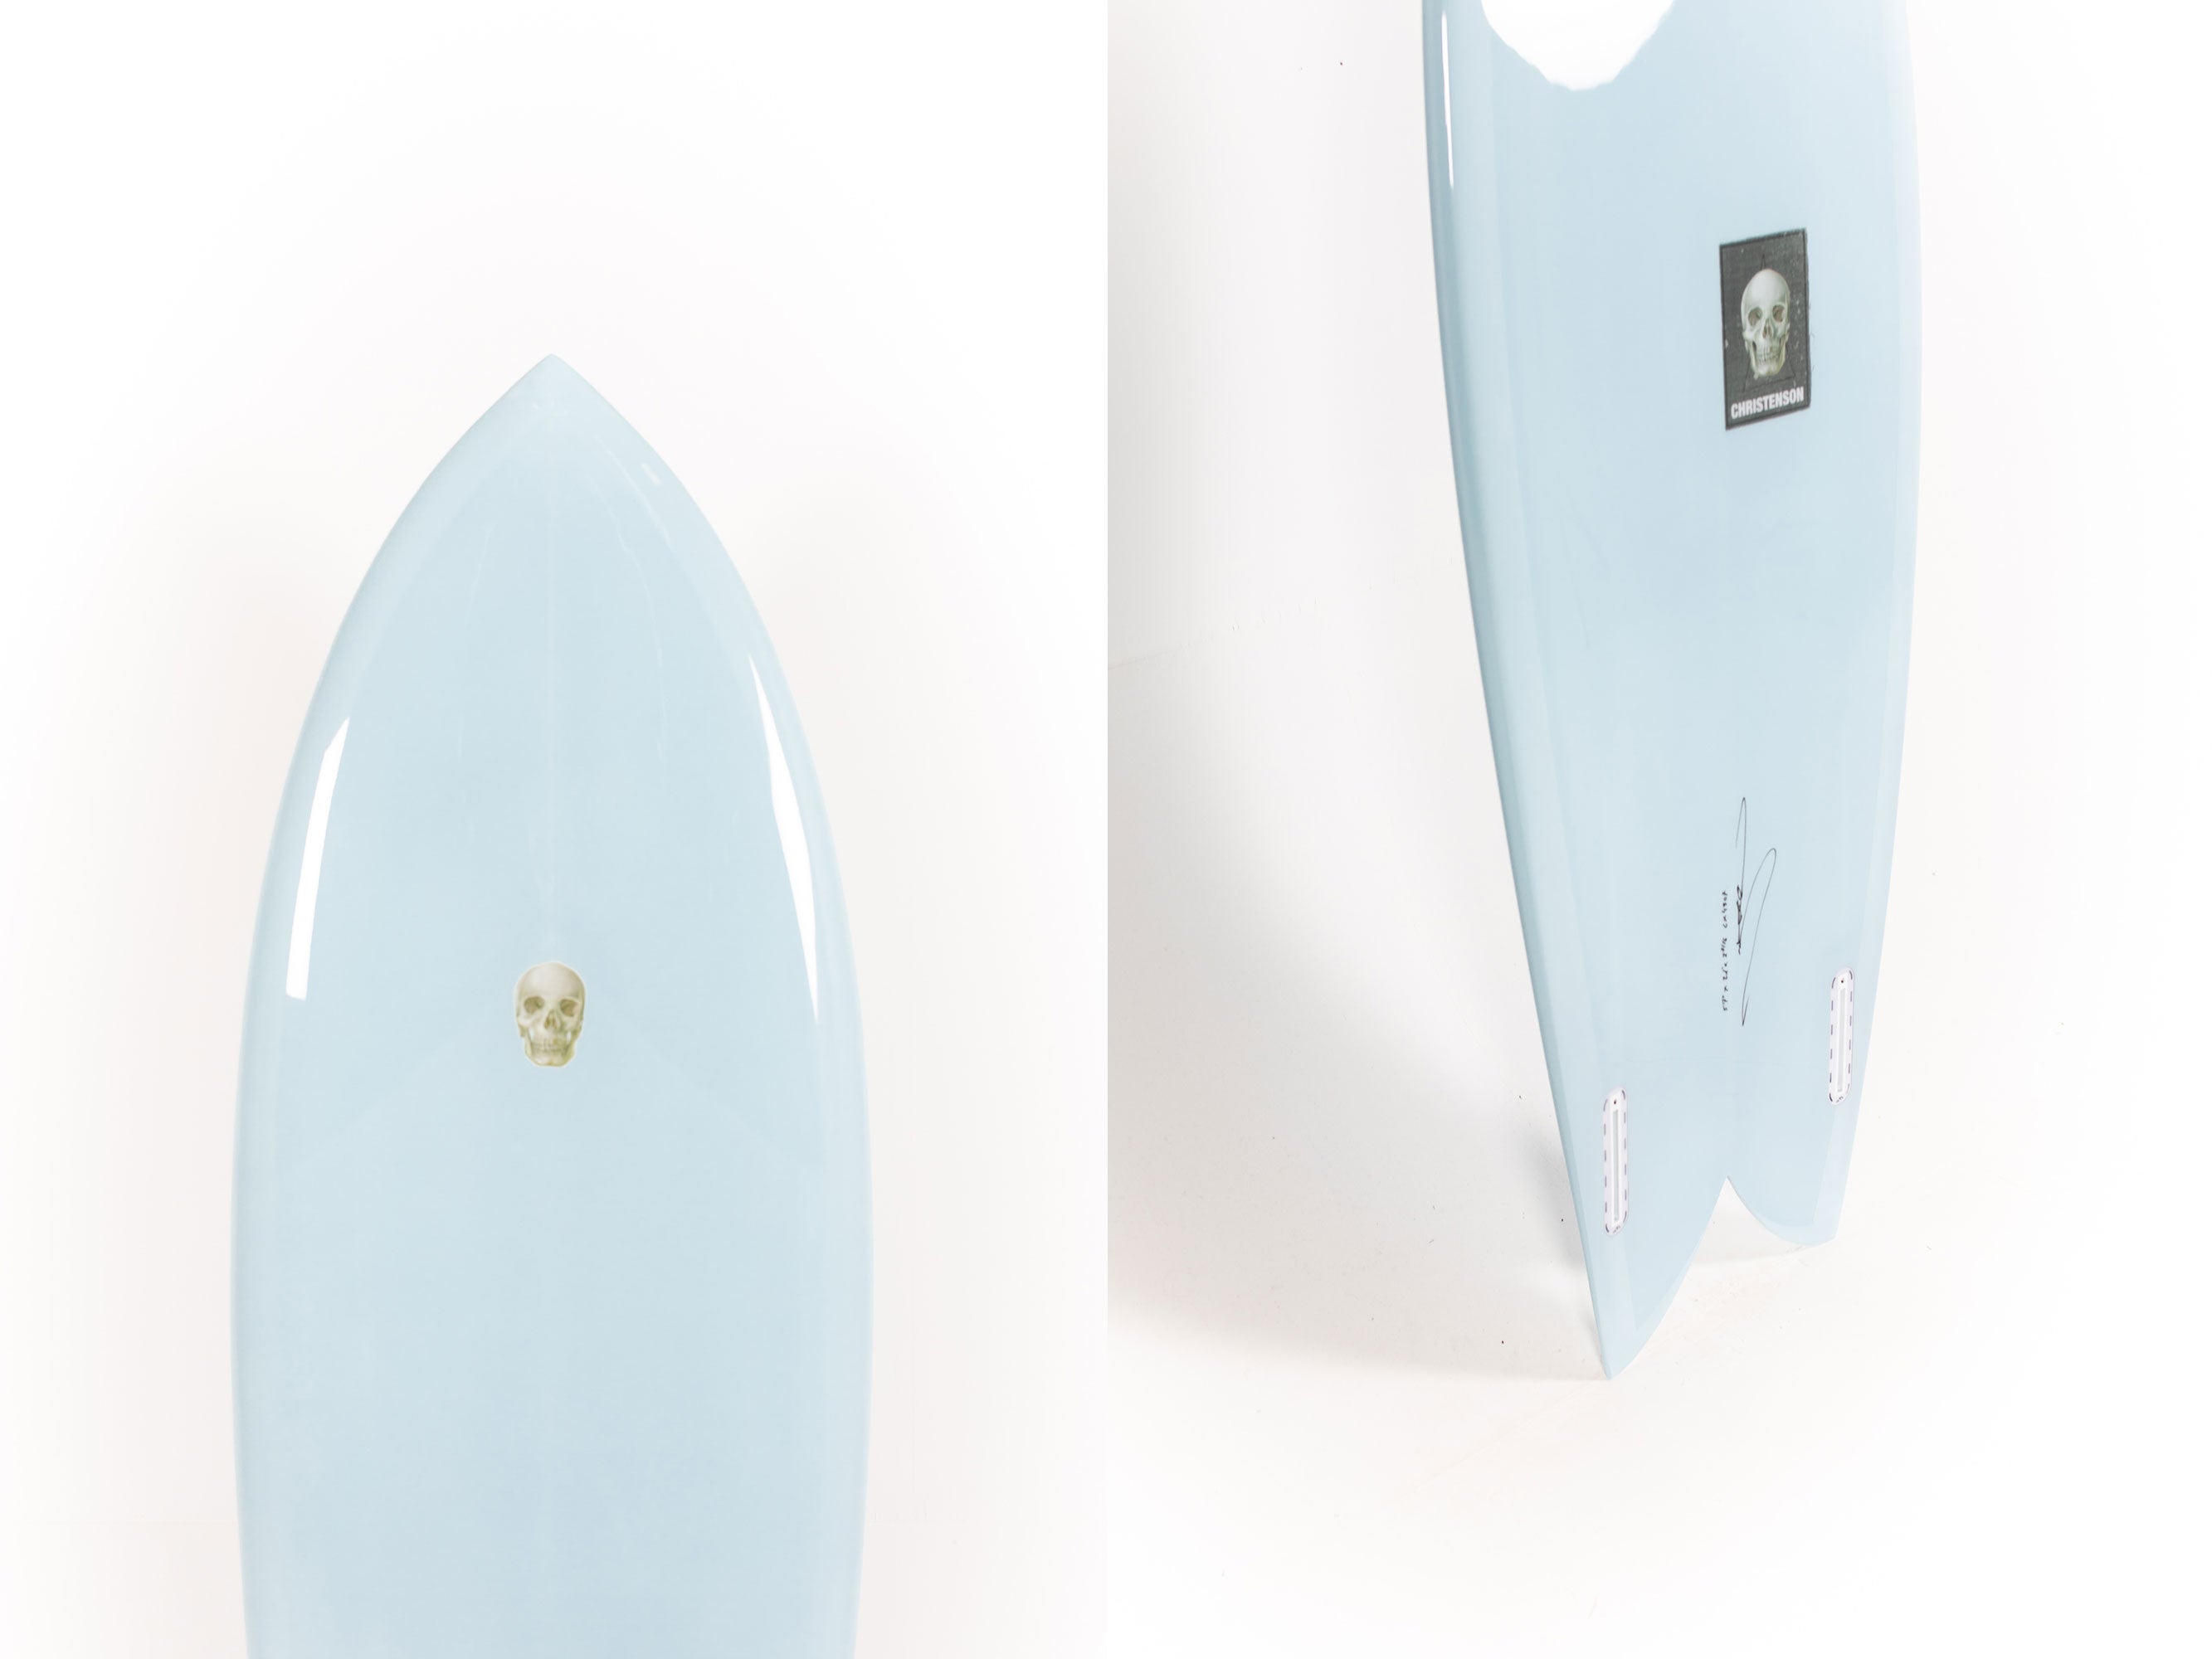 Christenson Surfboards - CHRIS FISH - 5'7" x 21 x 2 7/16 -CX04307